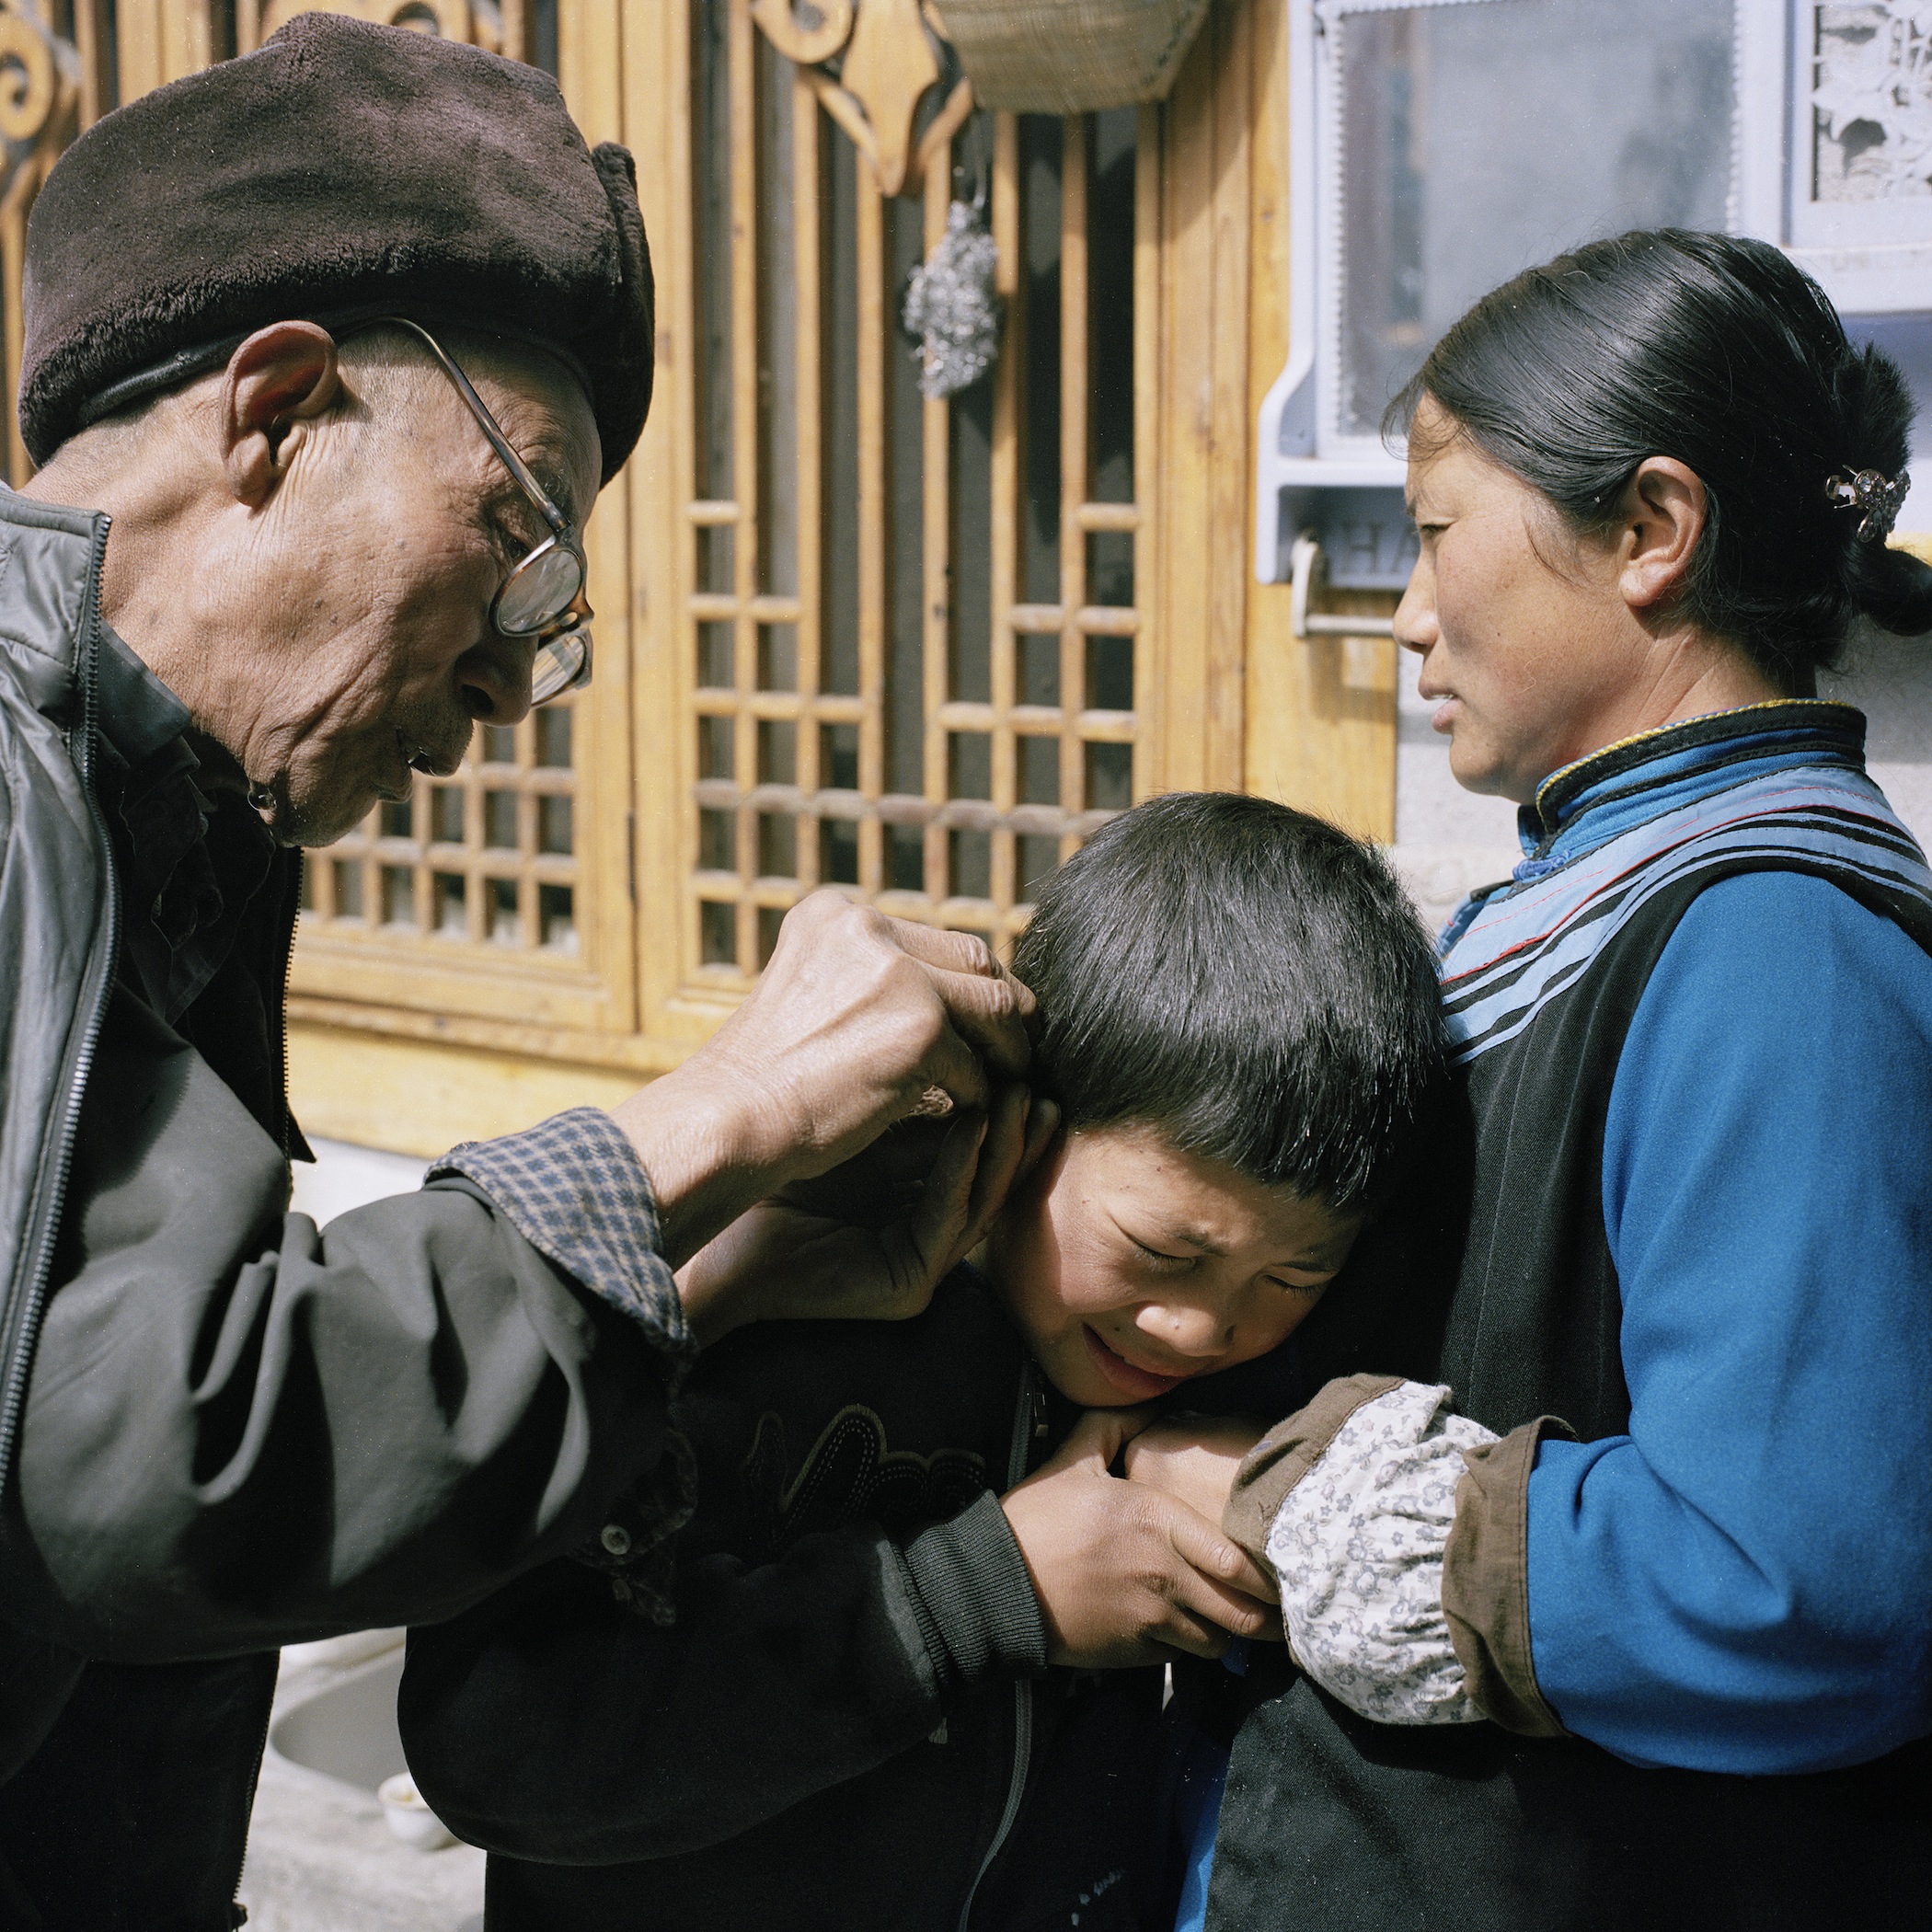 Shaman Burning a Boy's Ear to Drive away Evil Spirits, Radish Village, Sichuan, China, April 2016